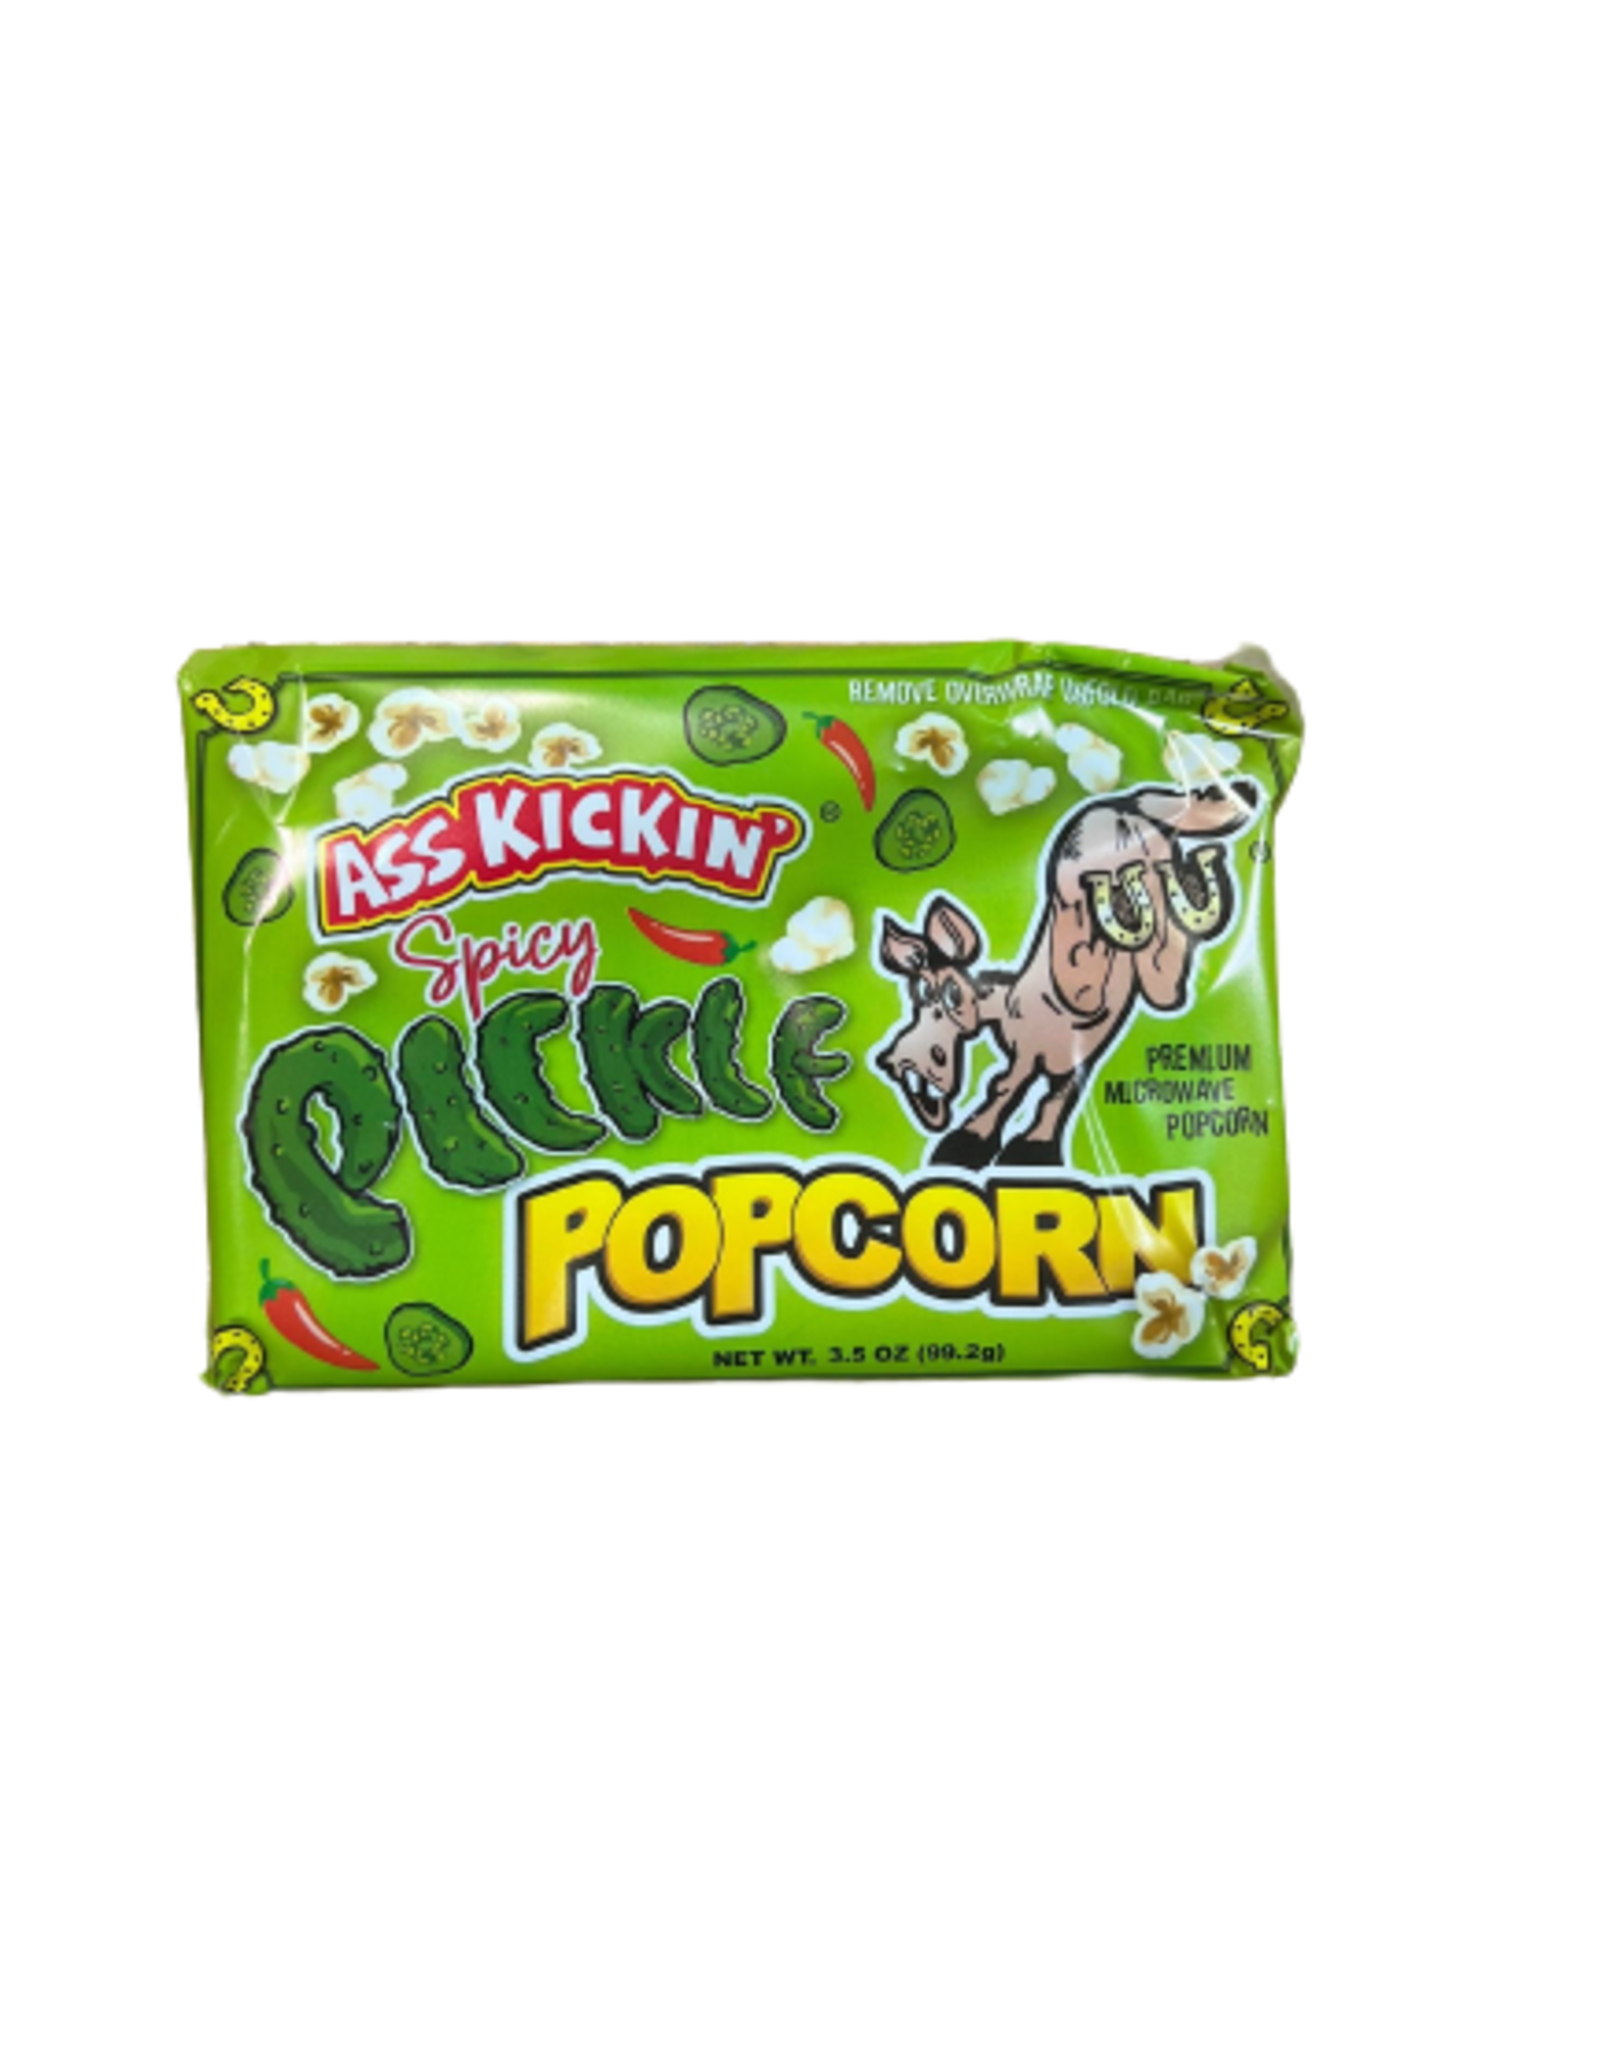 Ass Kickin' Spicy Pickle popcorn